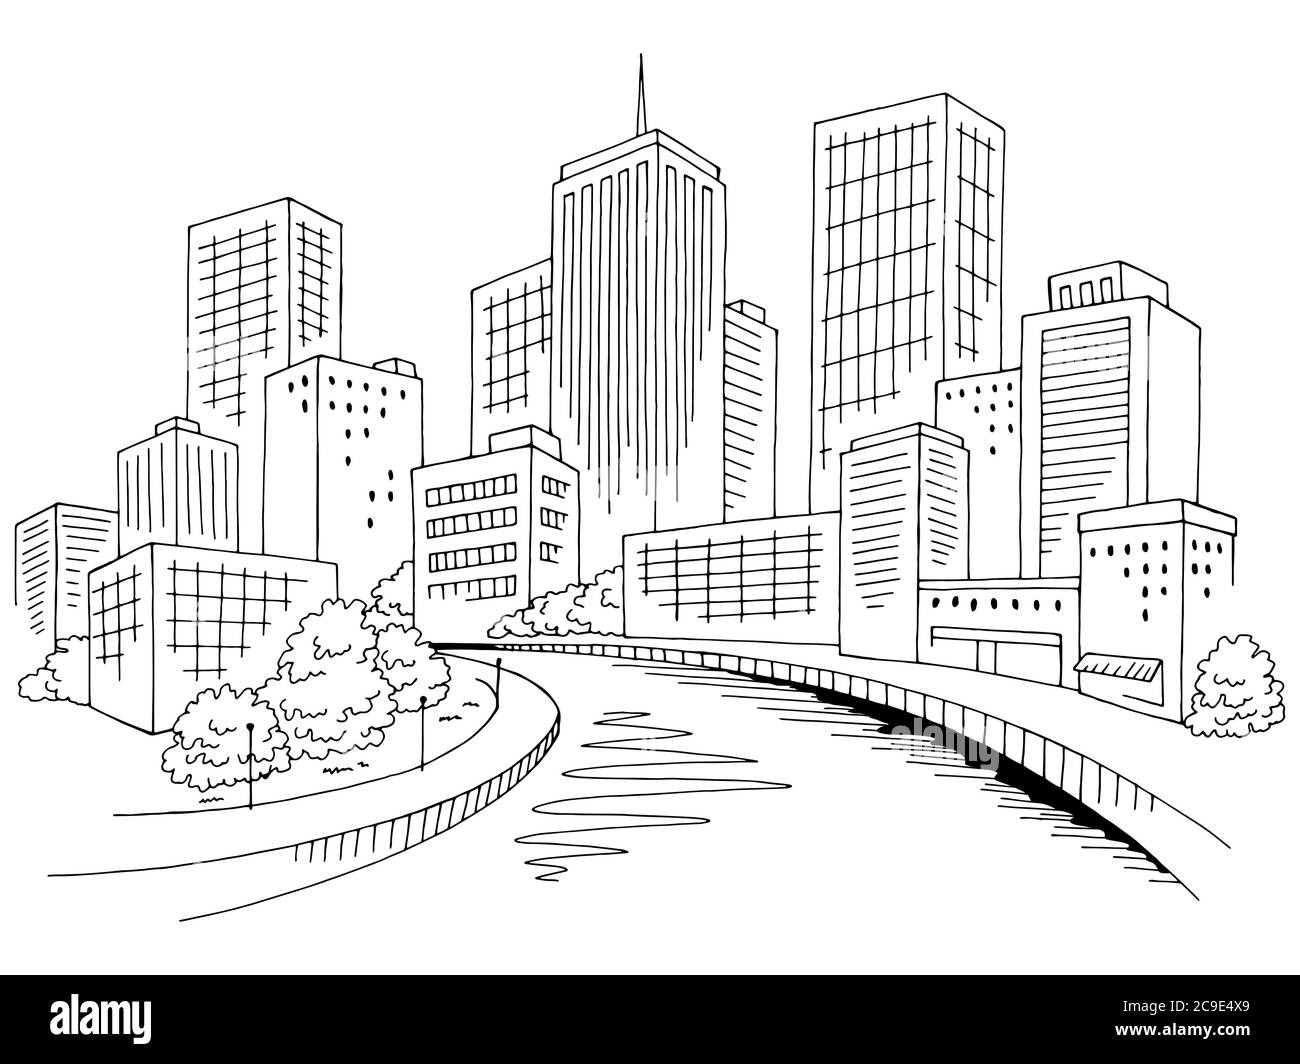 Stadt Fluss Grafik schwarz weiß Stadtbild Skyline Skizze Illustration Vektor Stock Vektor